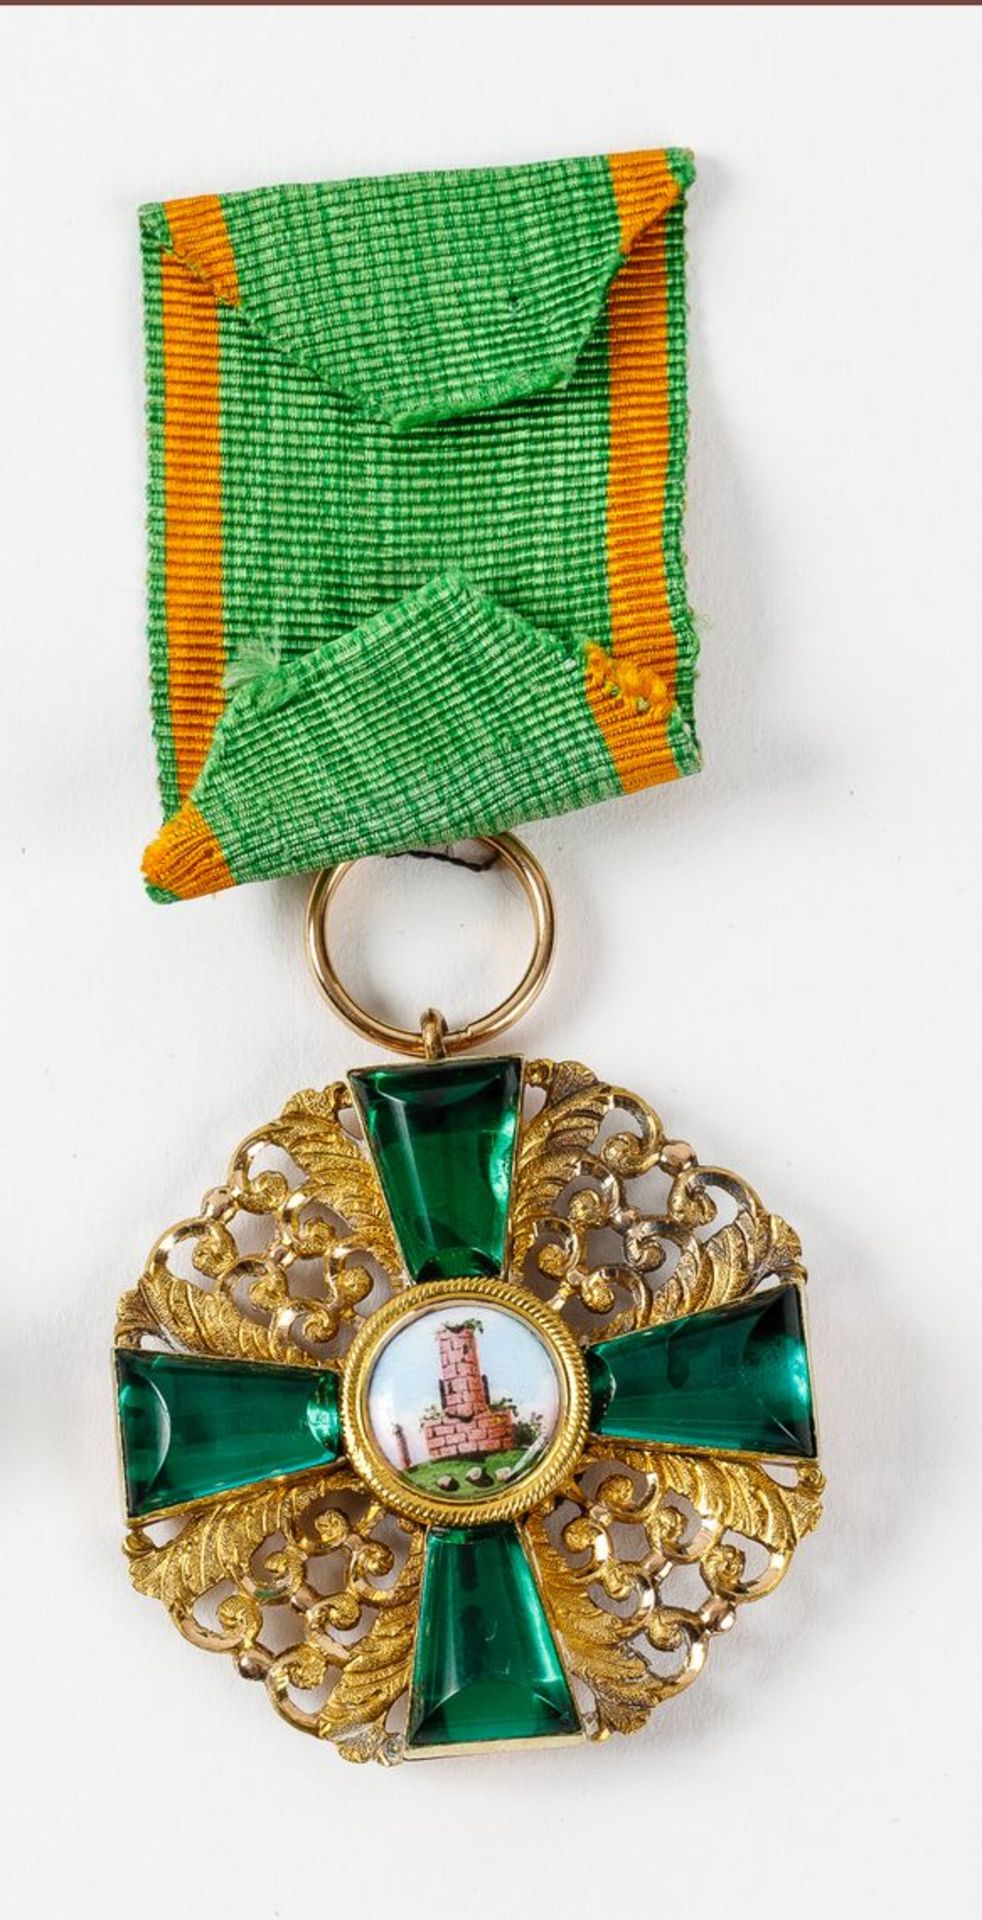 BadenOrden vom Zähringer Löwen Ritterkreuz 1. Klasse, am Bande. Kreuz Silber vergoldet, Kreuzarme